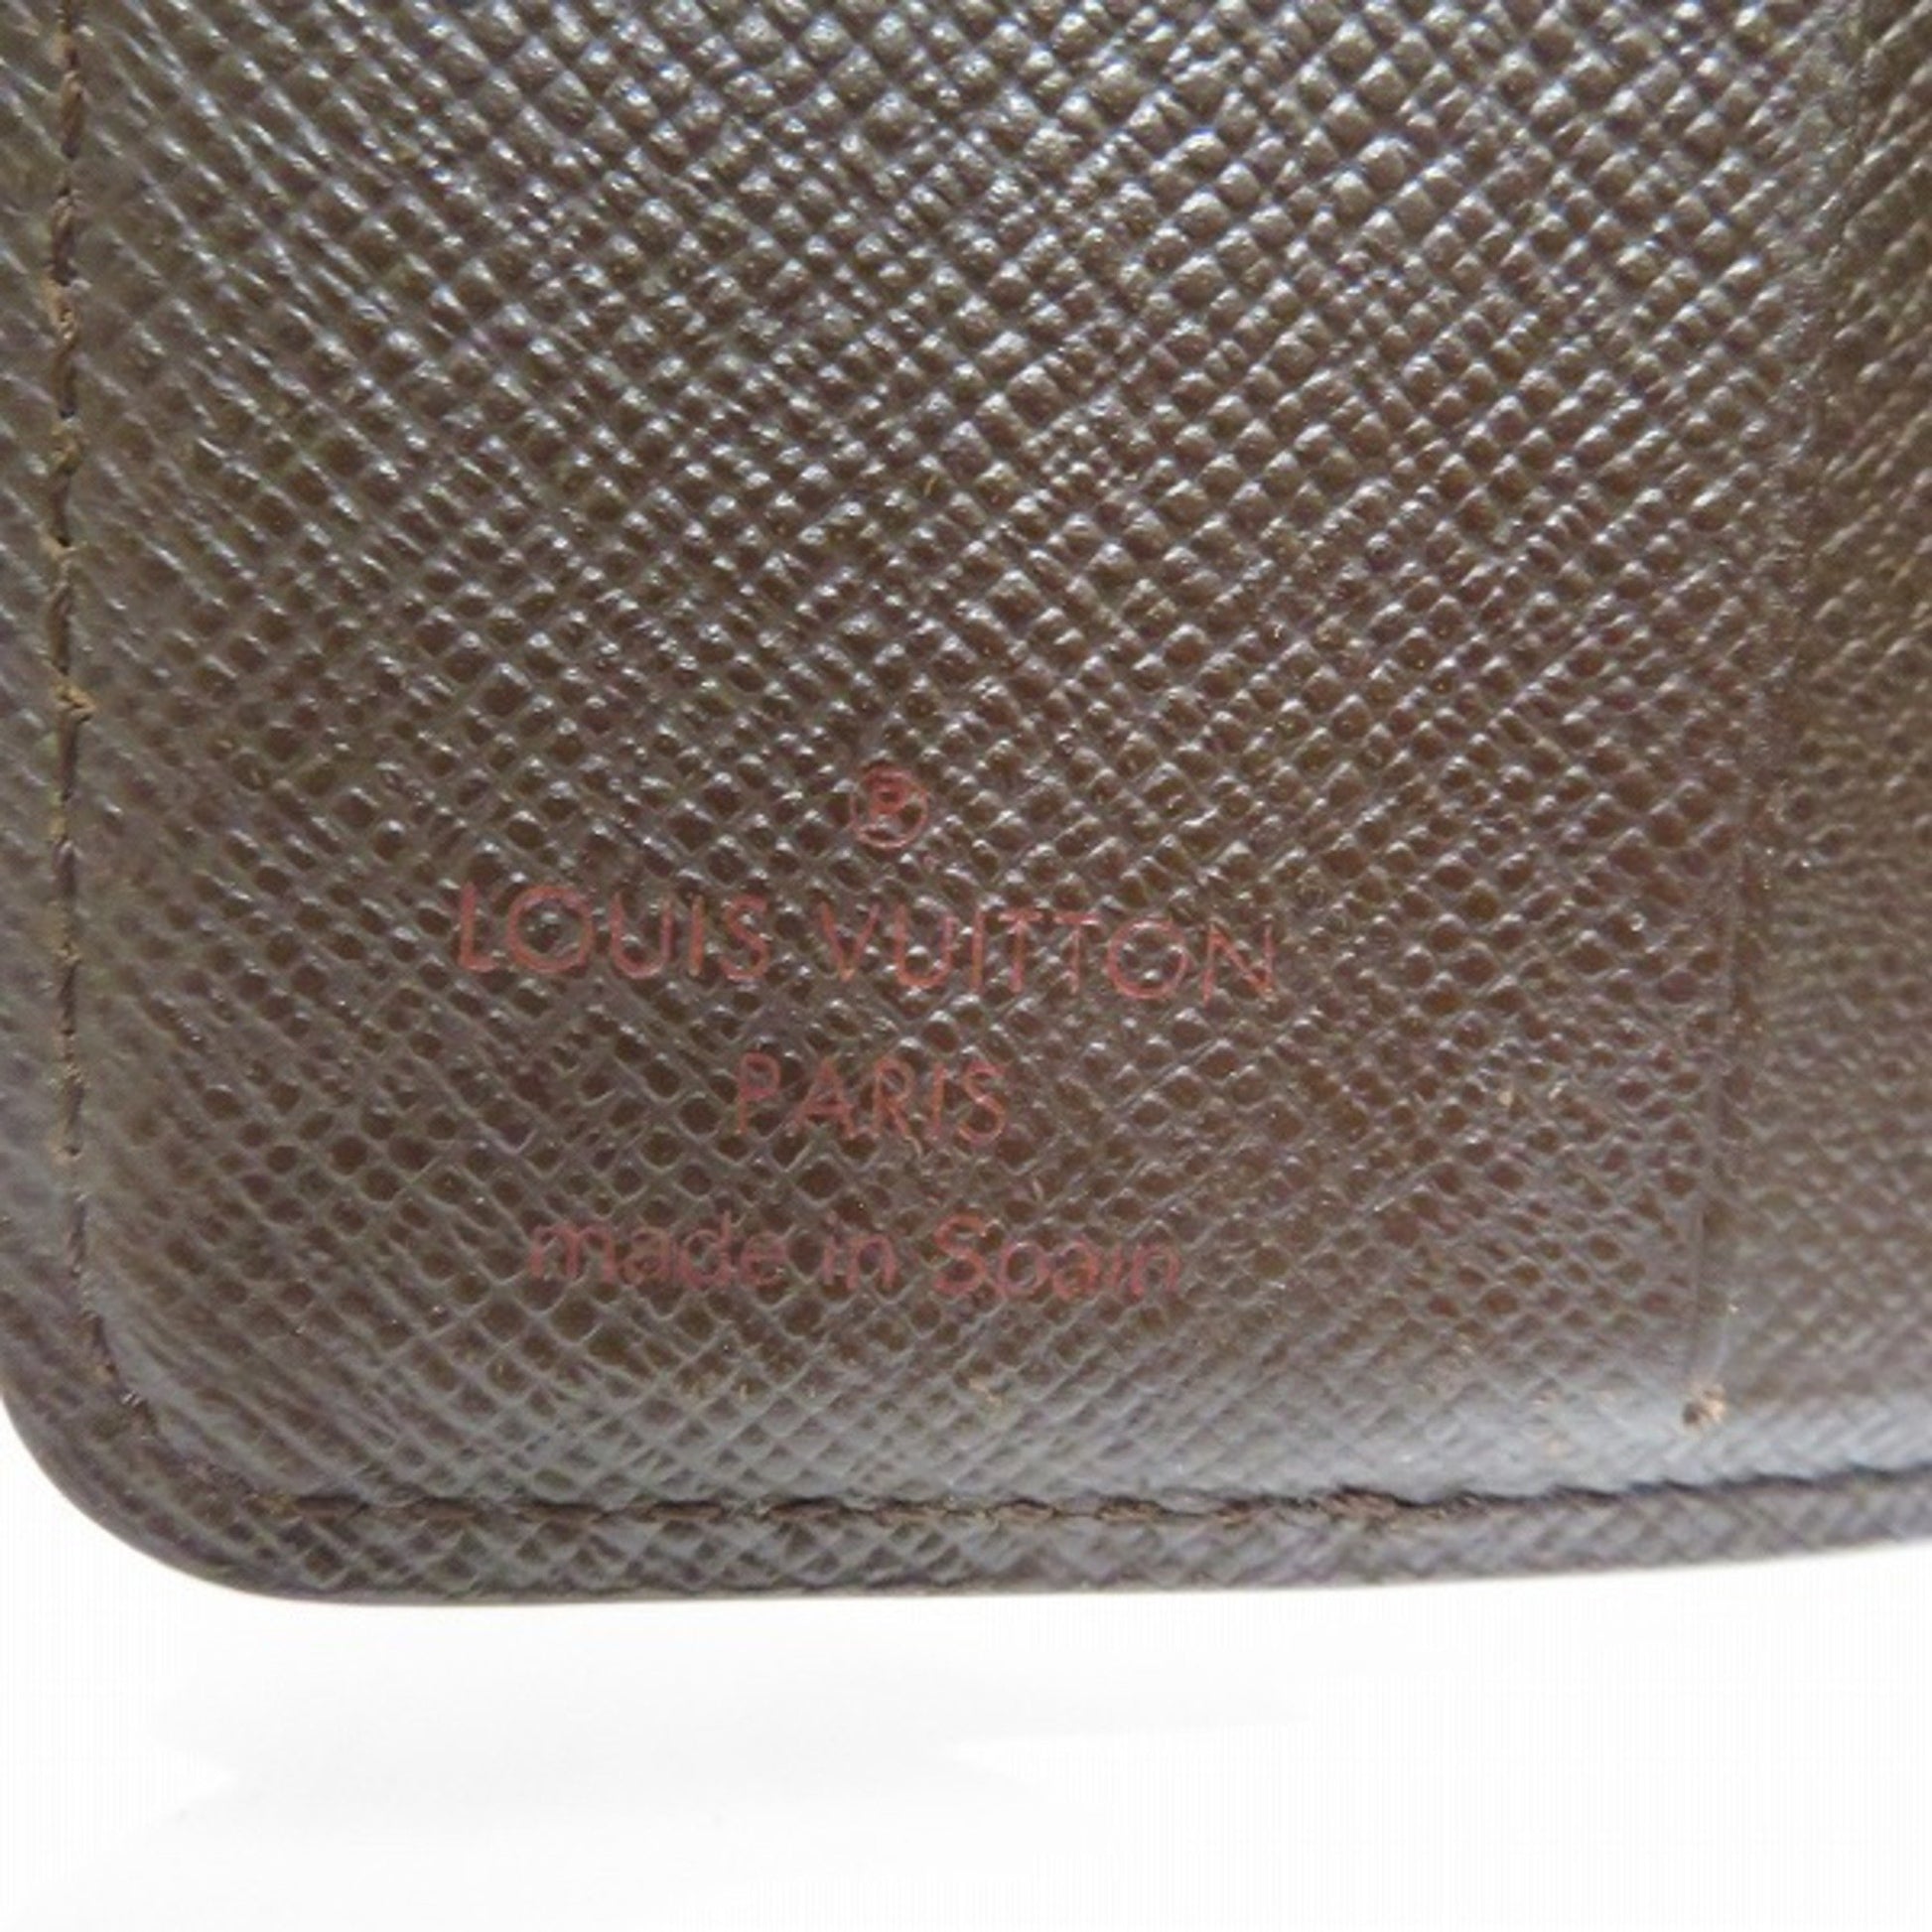 Auth Louis Vuitton Damier Compact Zip Bi-fold Small Wallet N61668